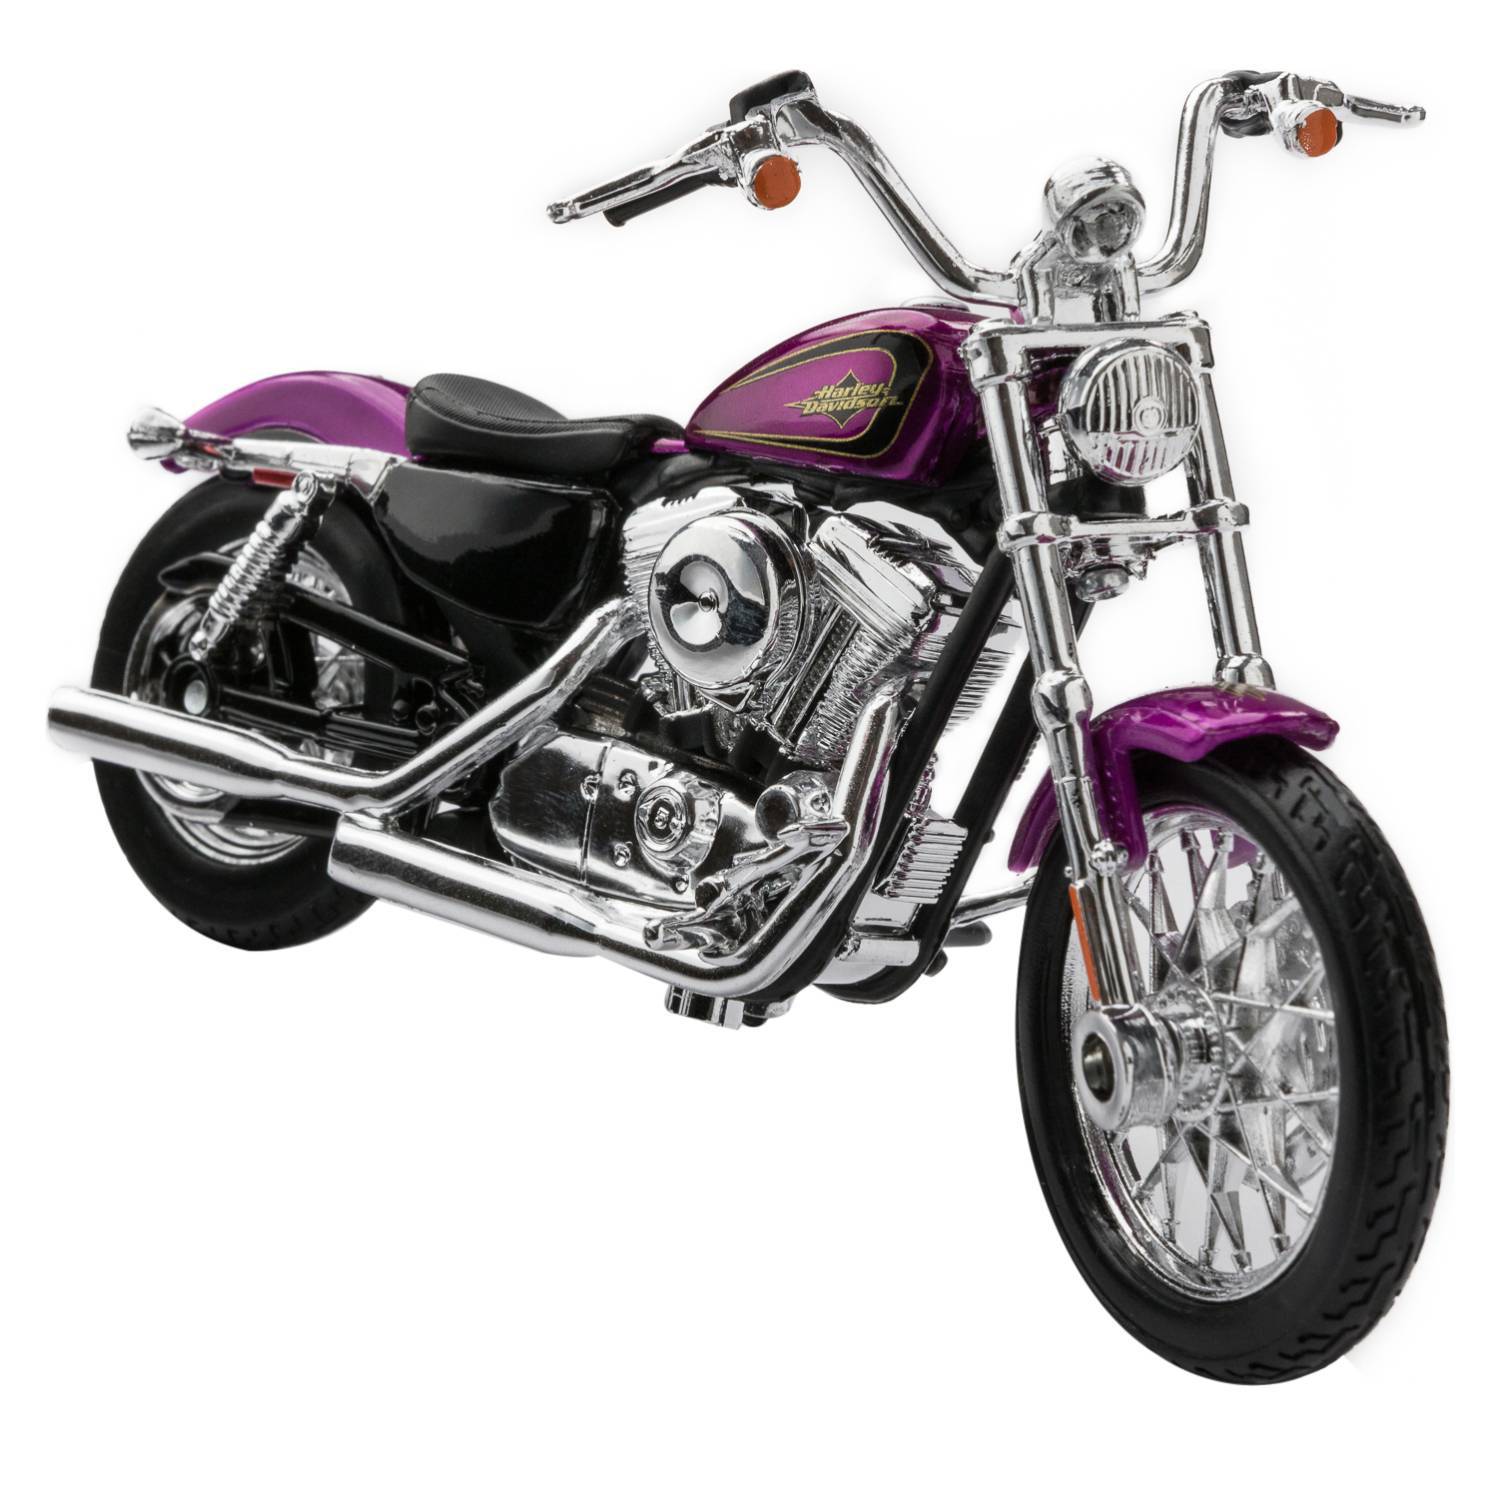 Harley-Davidson Seventy-Two: Accesorios a tu gusto -canalMOTOR